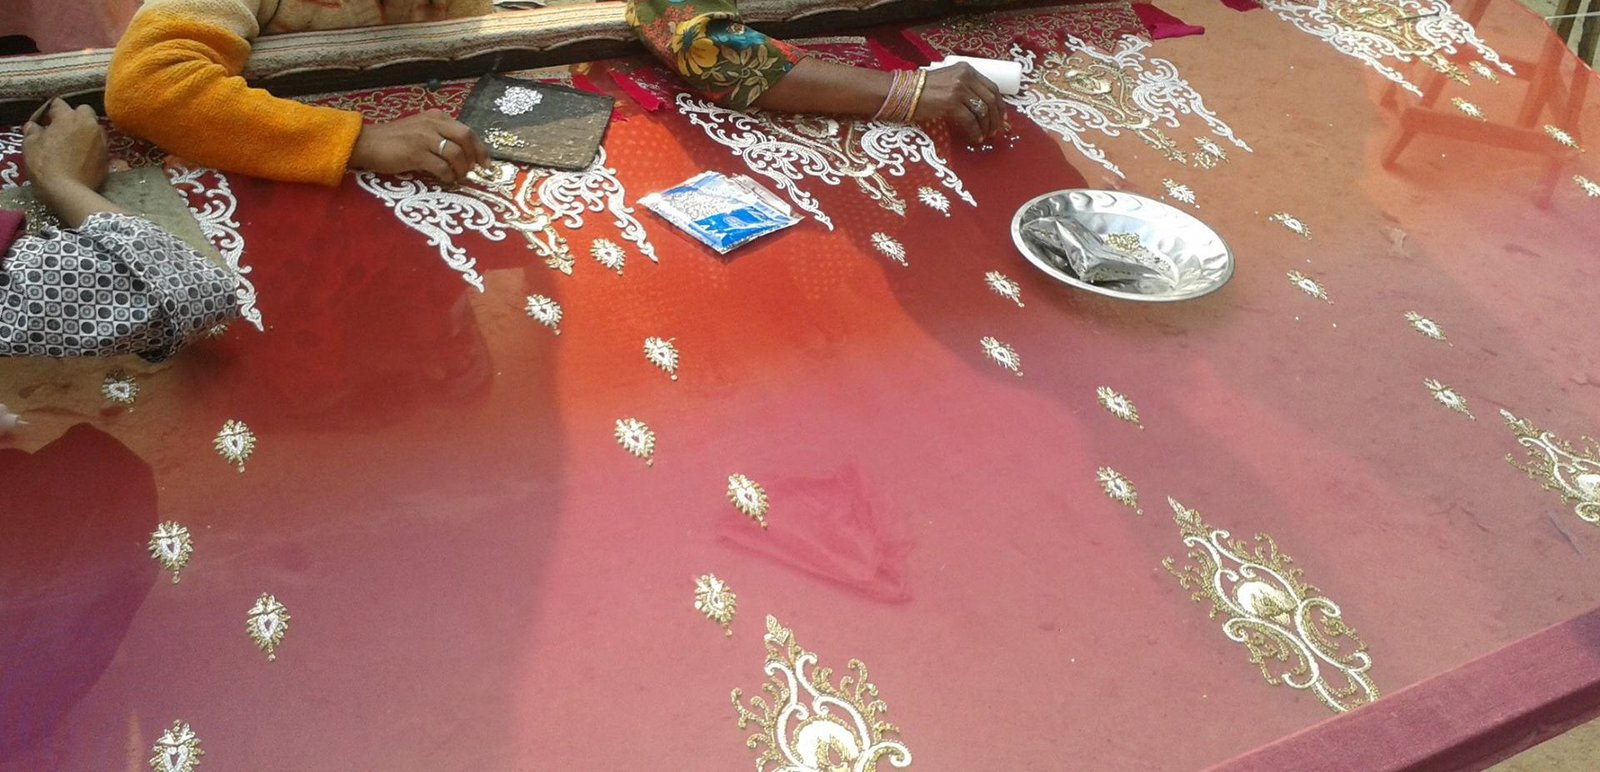 Zardozi Artisans at work in Lucknow